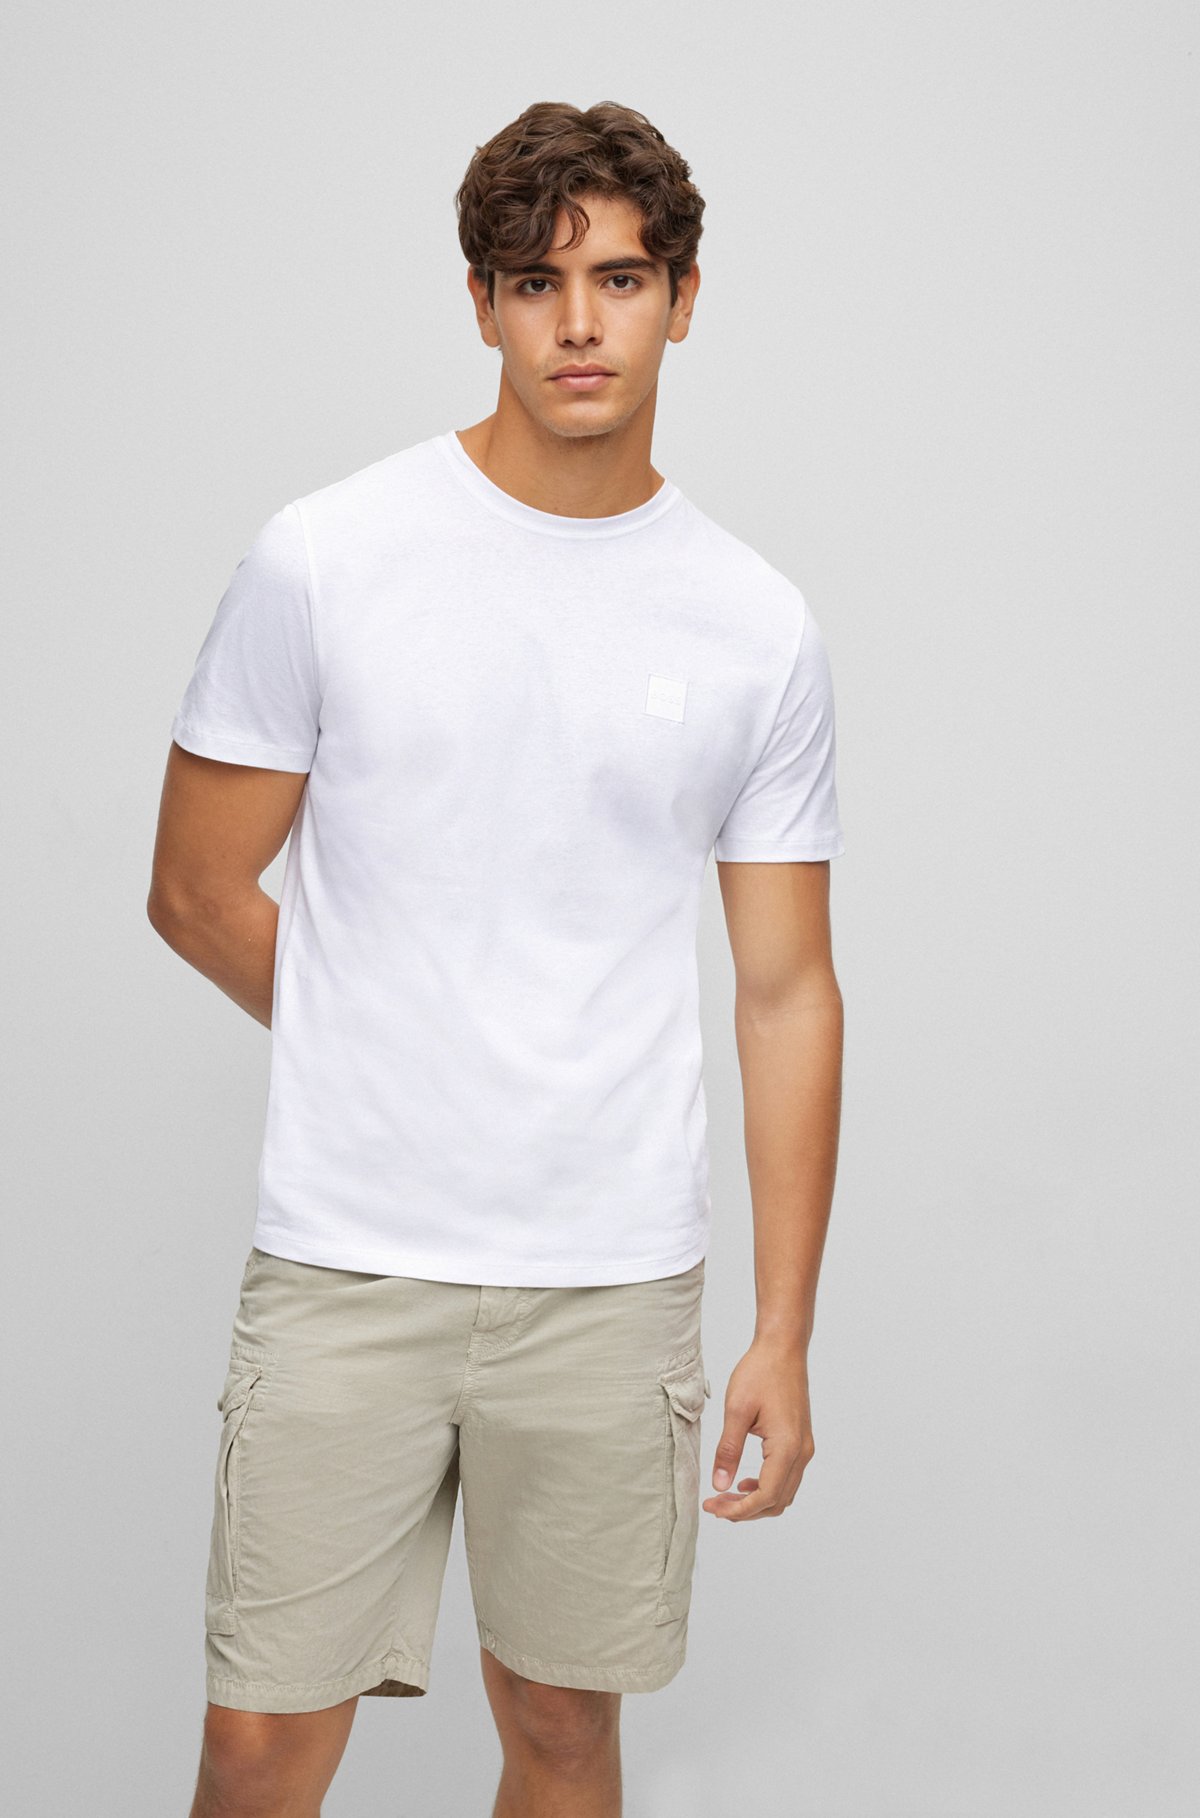 Camiseta relaxed fit de punto de algodón con parche de logo, Blanco